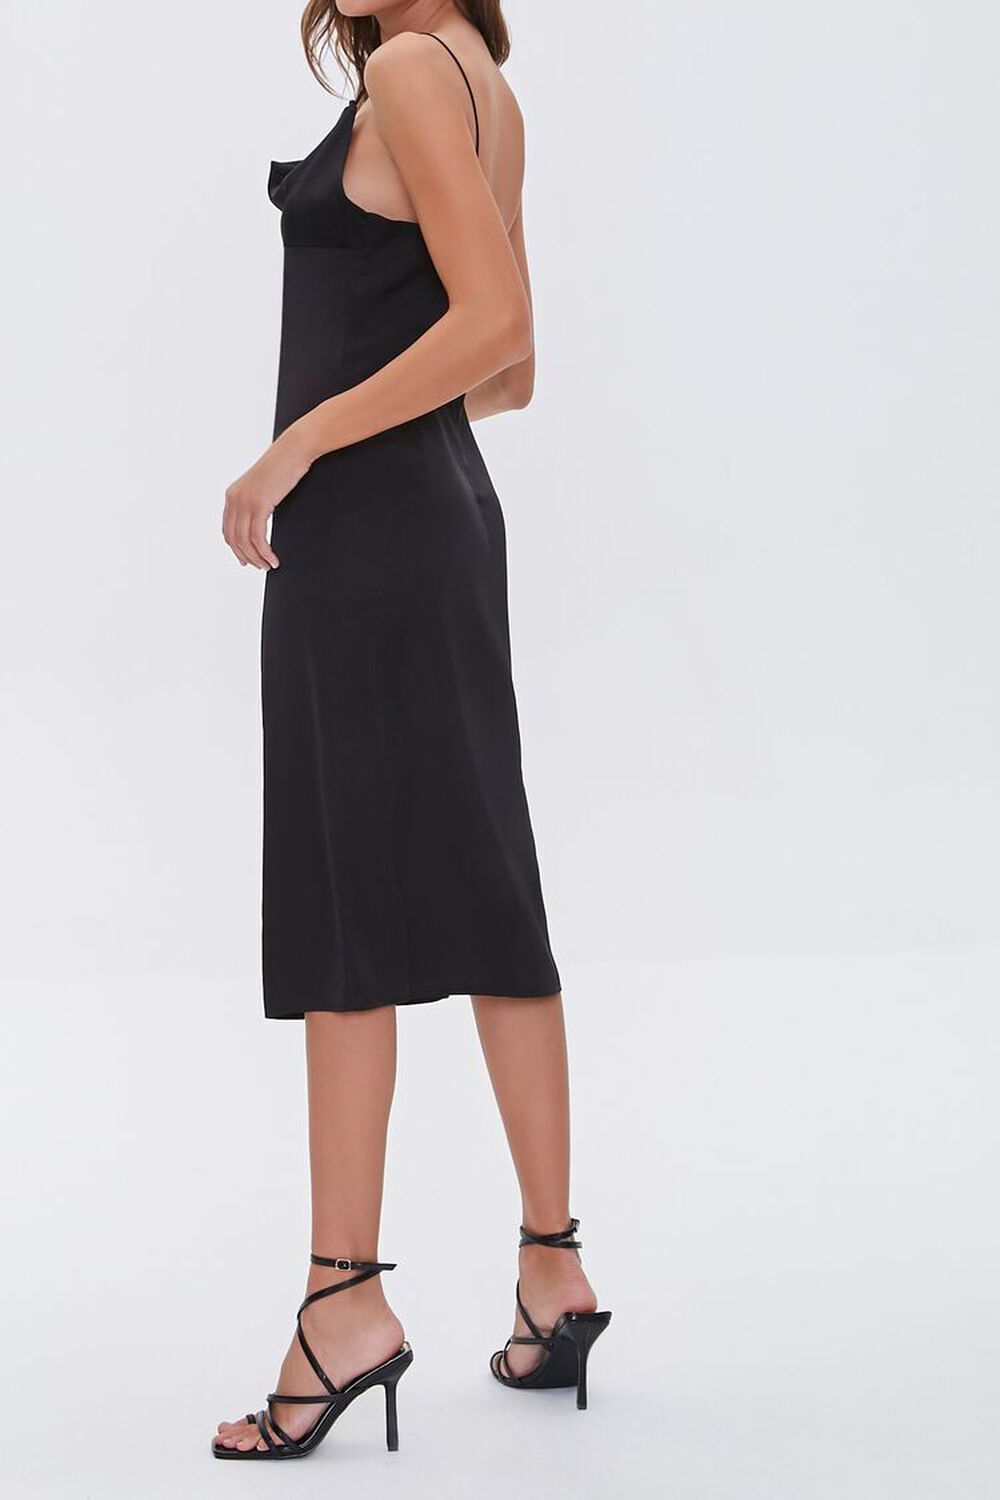 BLACK Satin Cowl-Neck Slip Dress, image 3